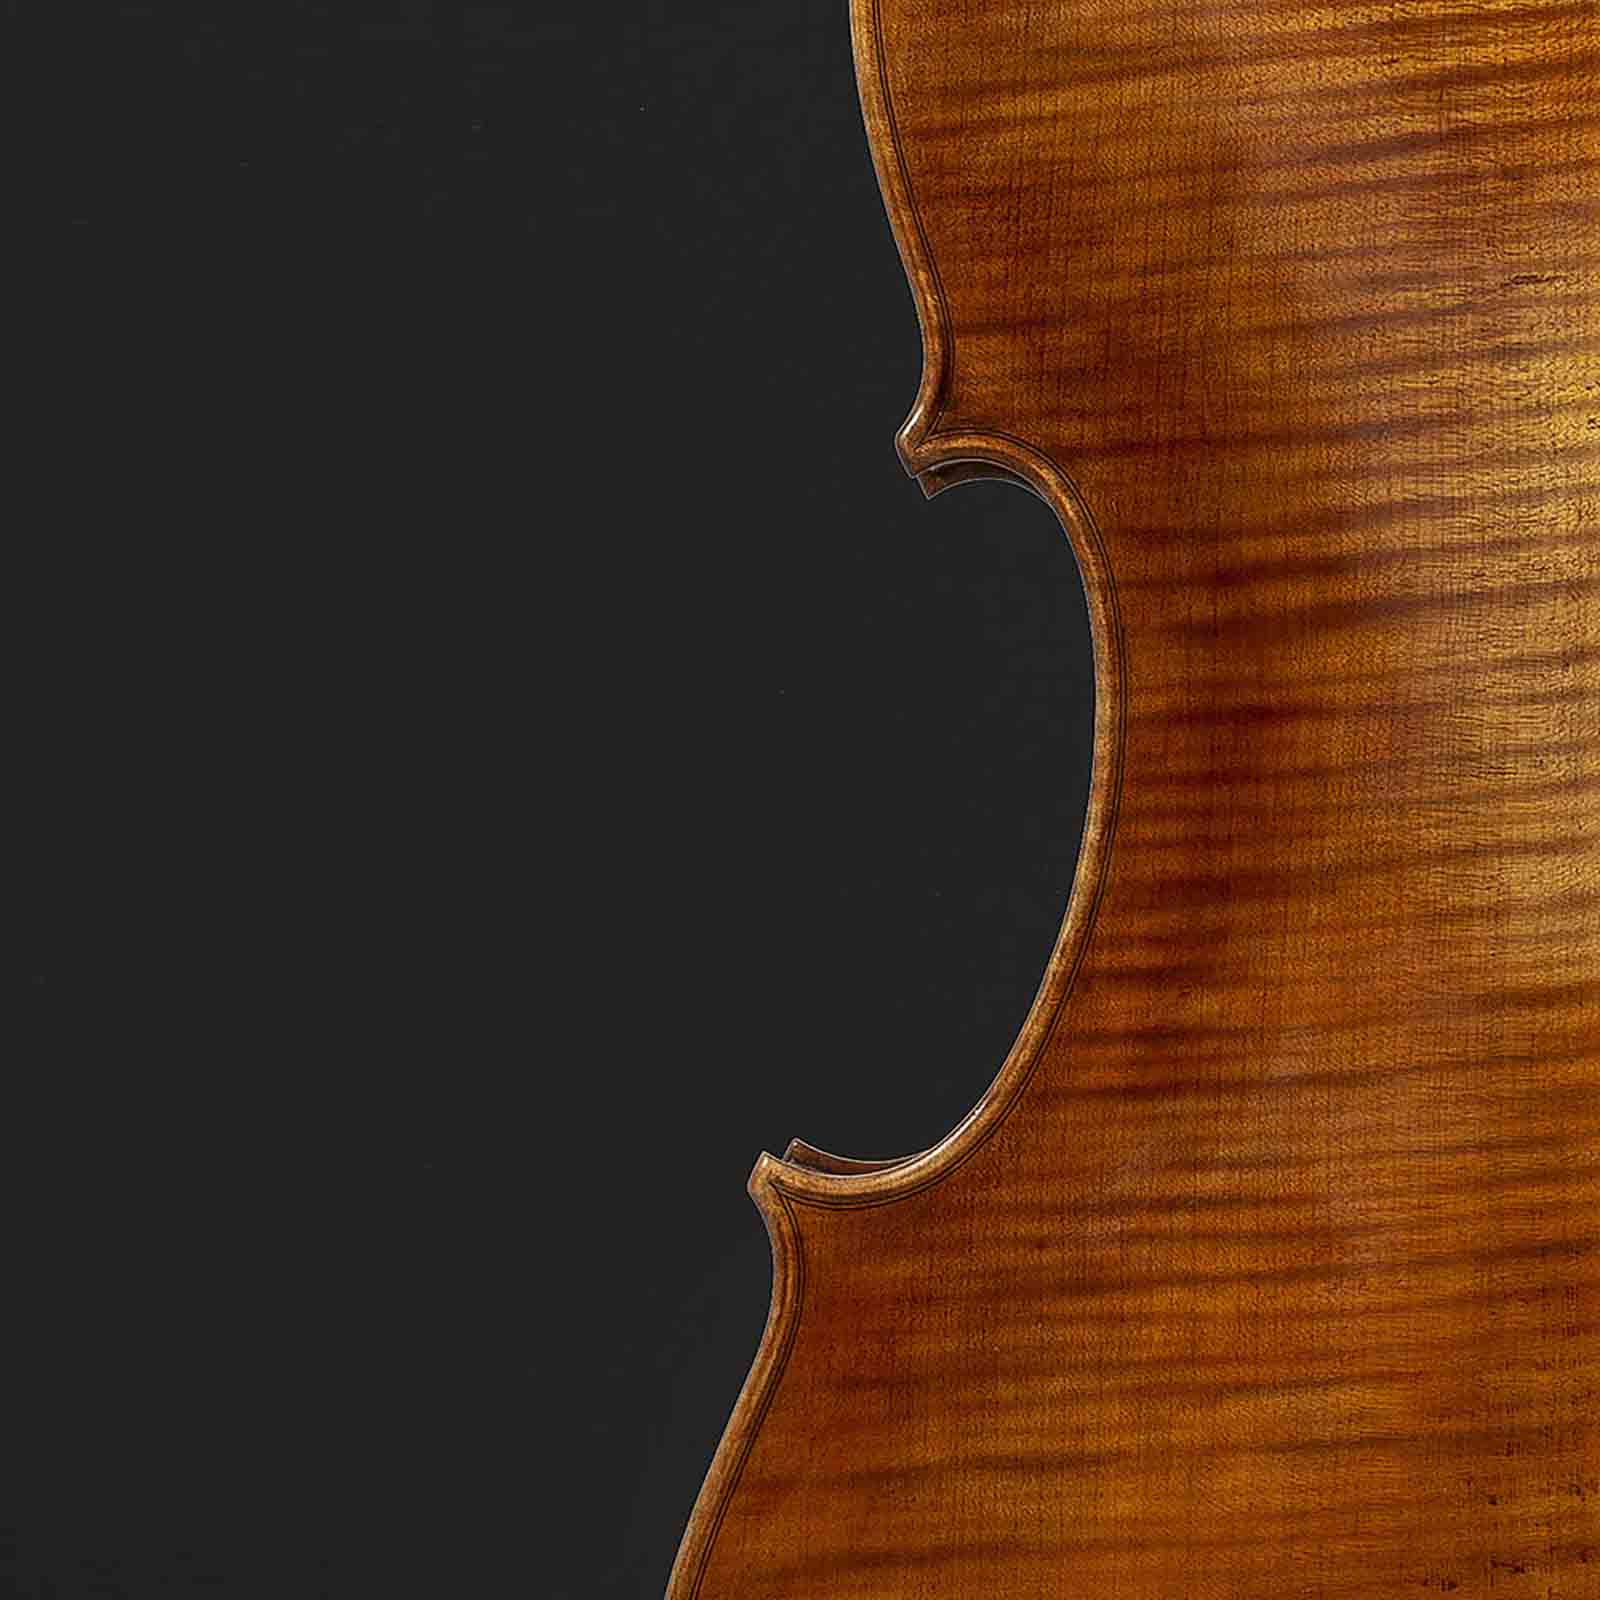 Antonio Stradivari Cremona 1700 “Cristiani“ “Aeos“ - Image 4